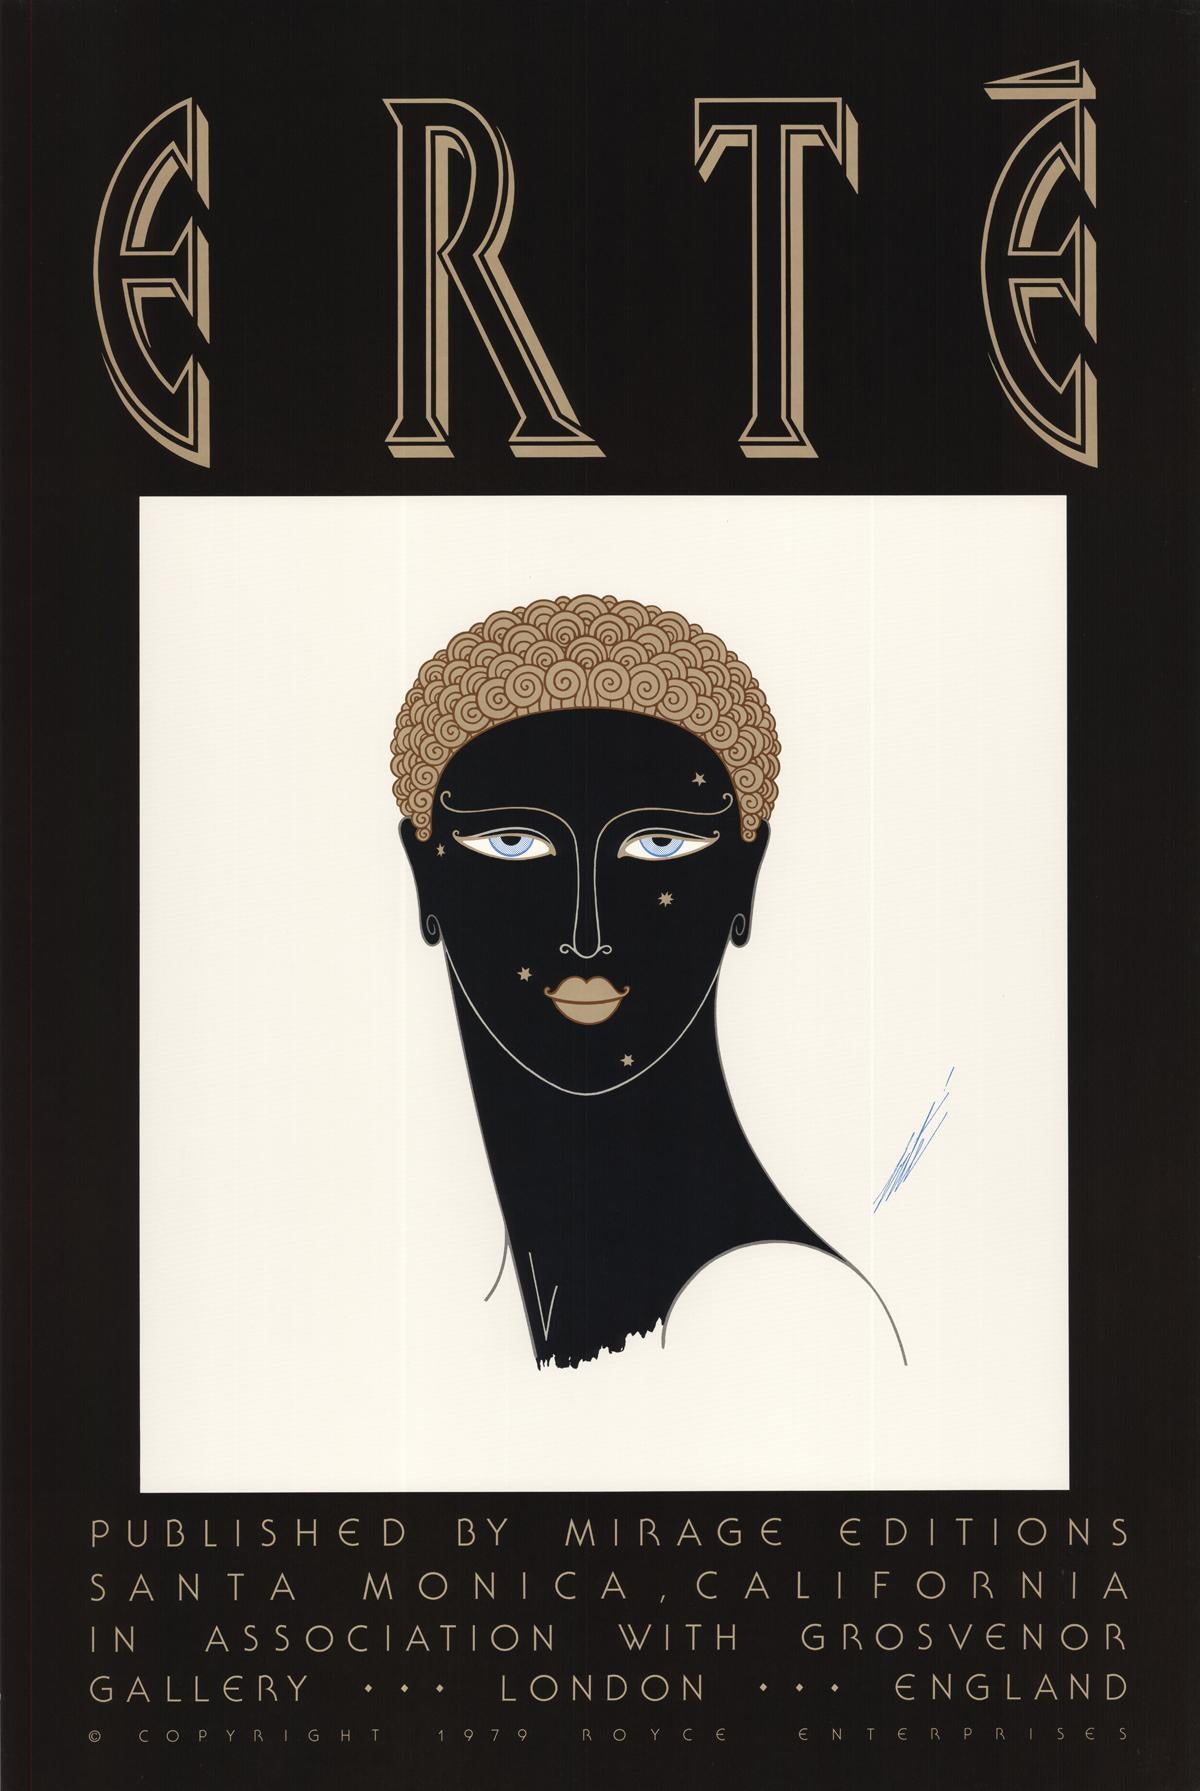 Erte--Queen of Sheba-30" x 20"-Poster-1979-Art Deco-Black & White, Brown - Print by Erté